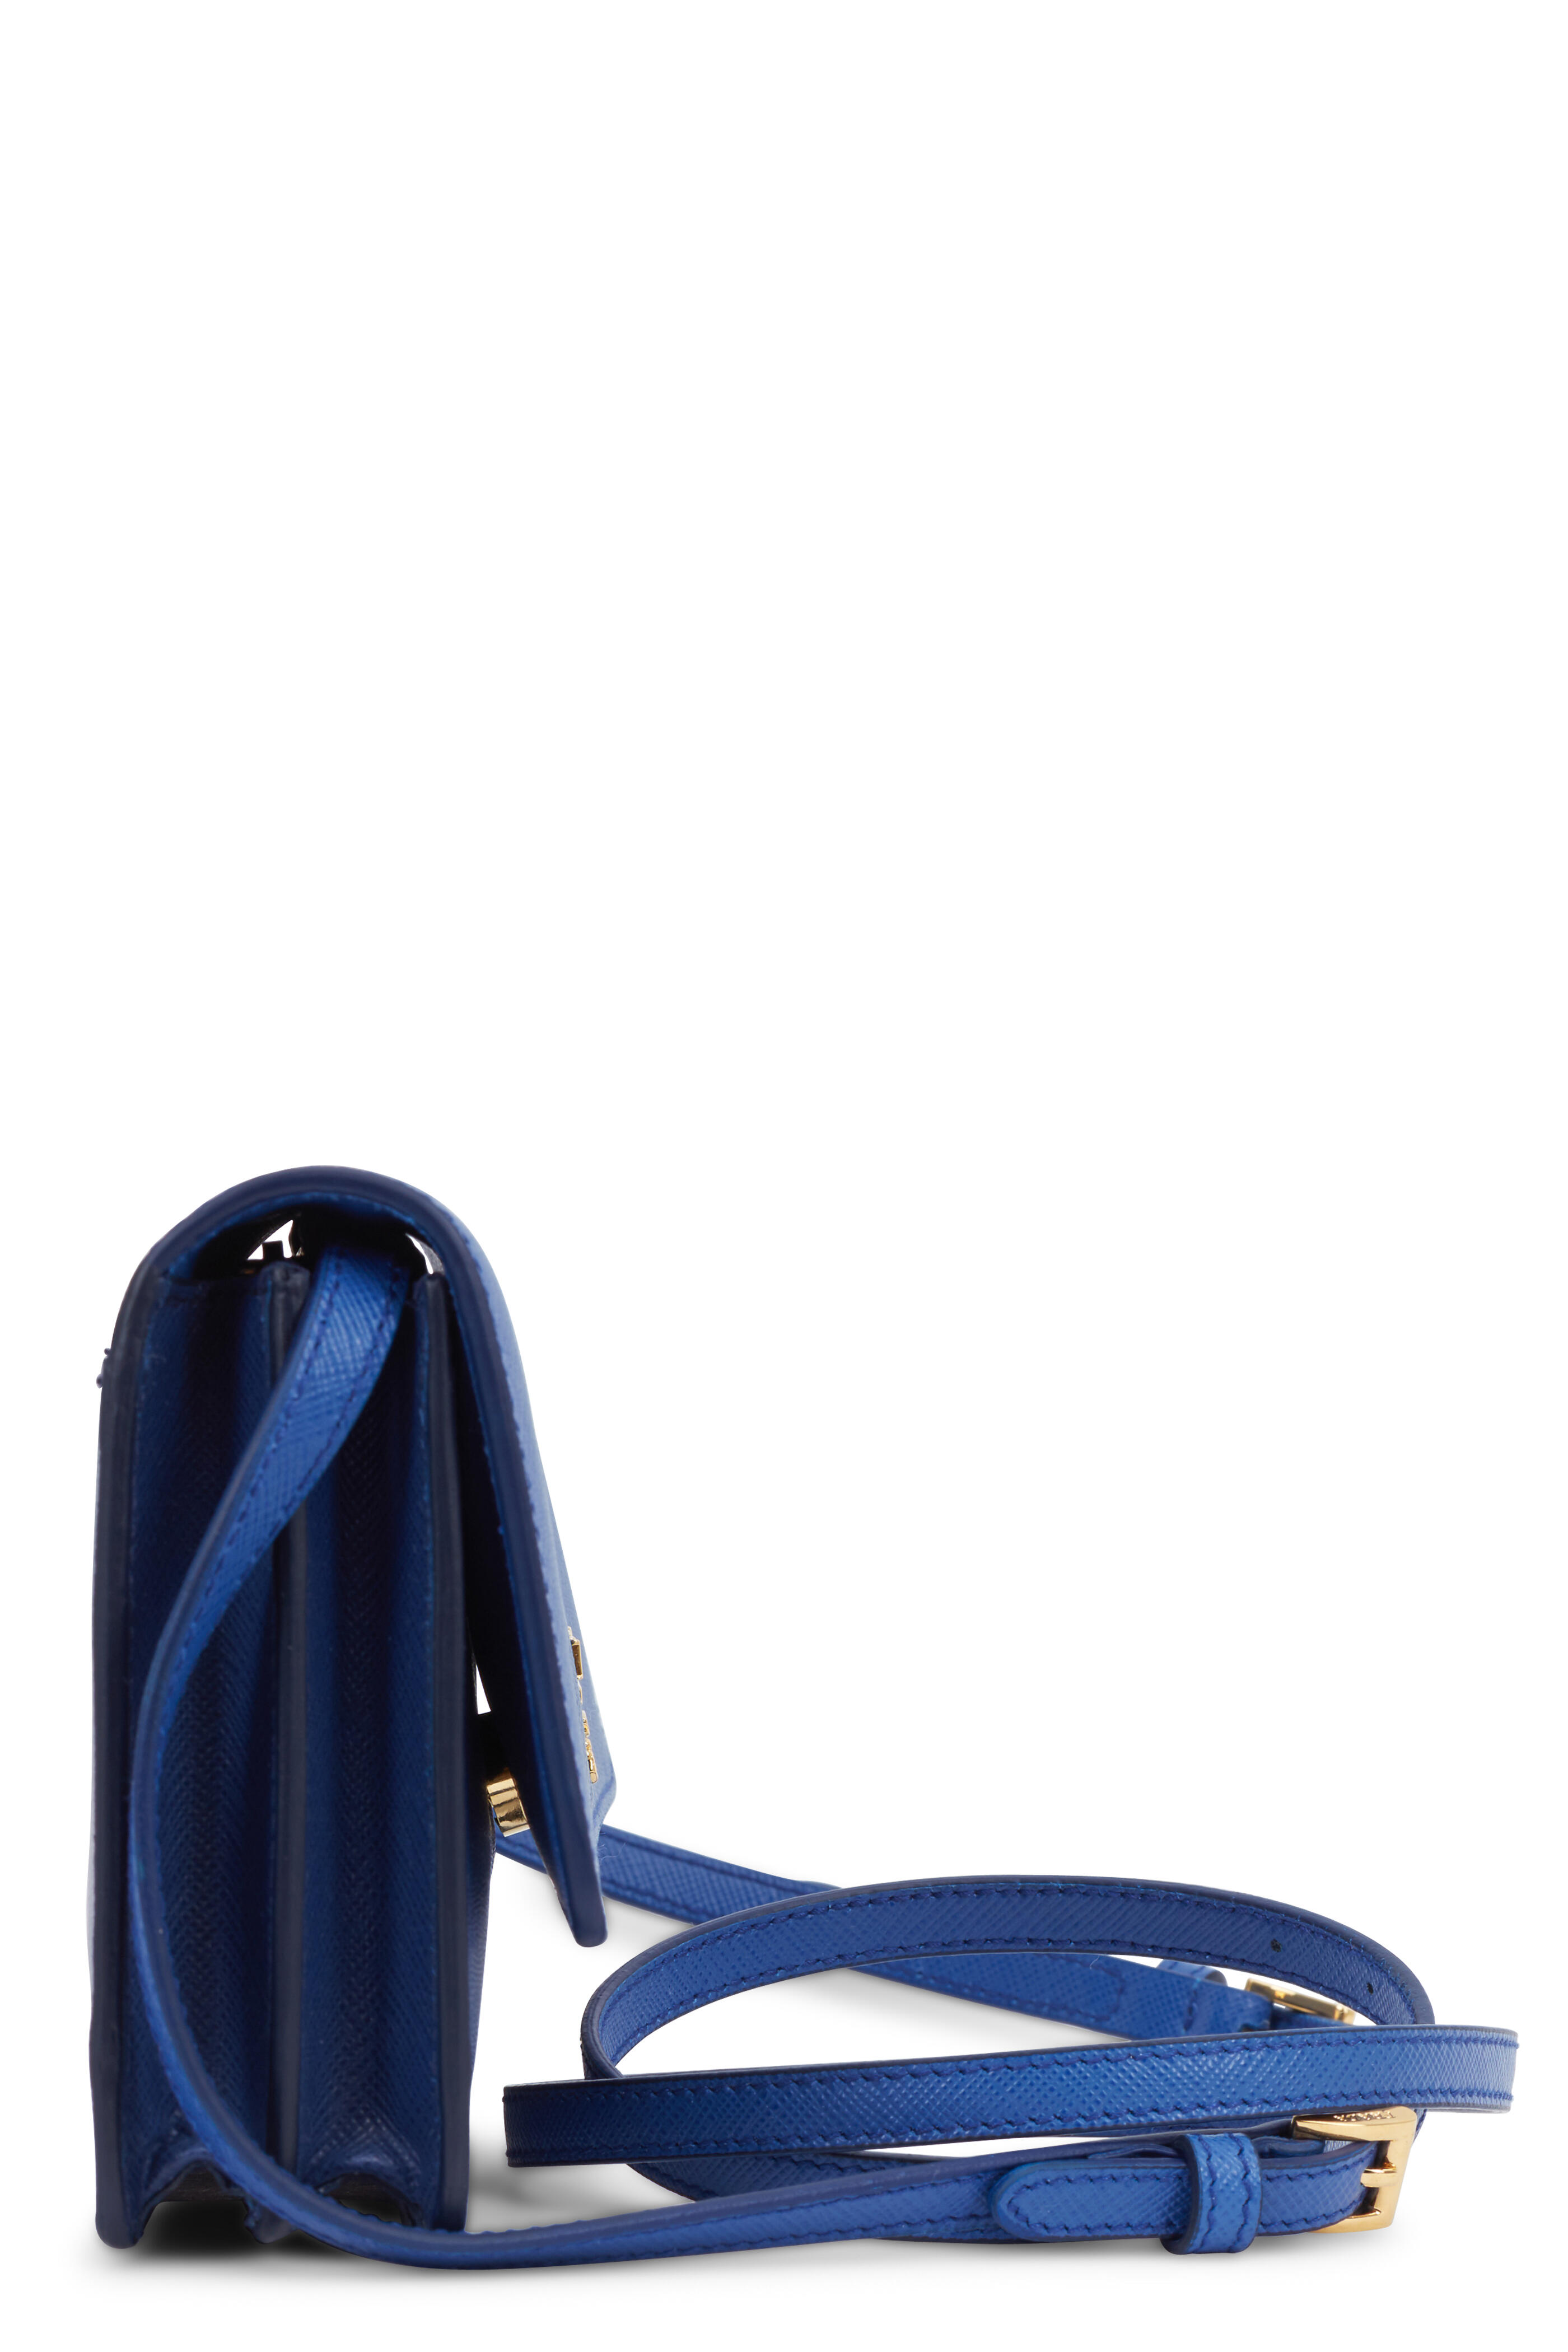 Prada - Royal Blue Saffiano Leather Small Tote